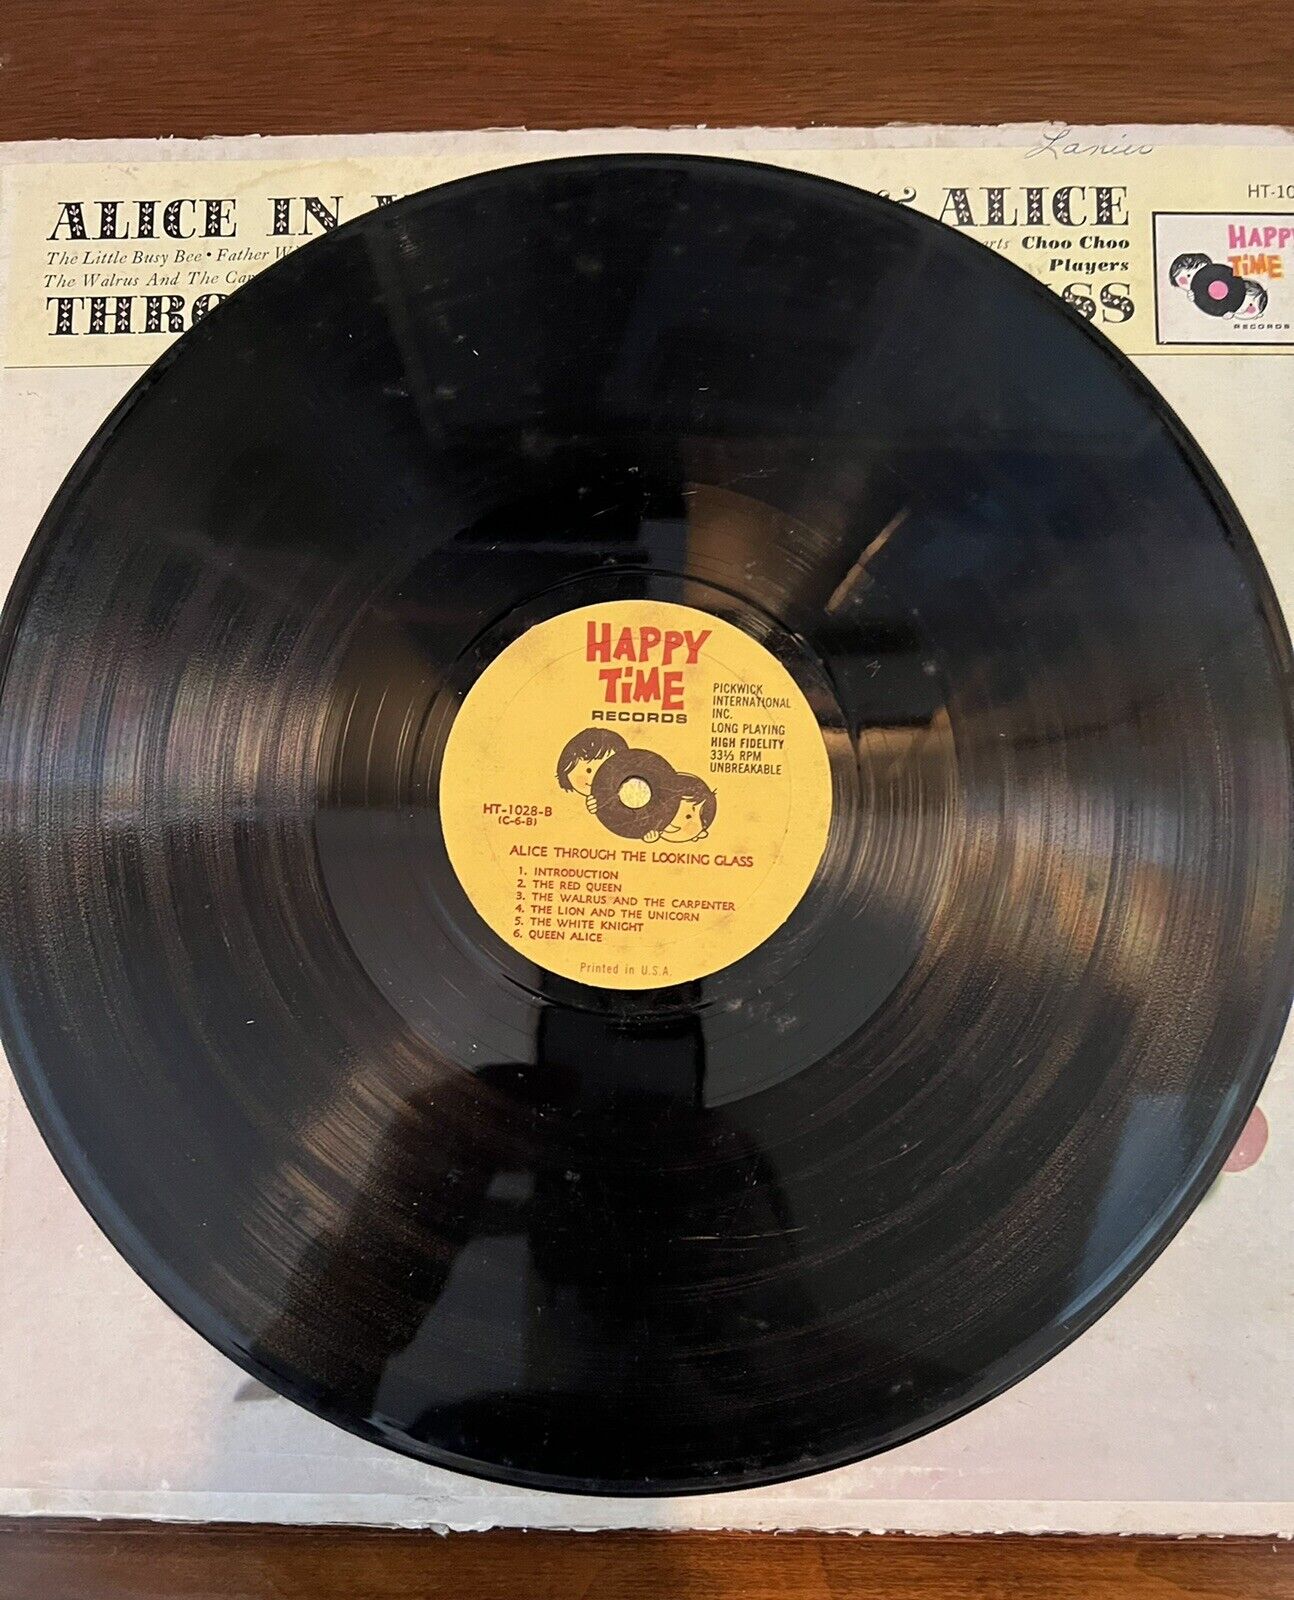 Alice in Wonderland & Alice Through The Looking Glass Vinyl LP Happy Time 102